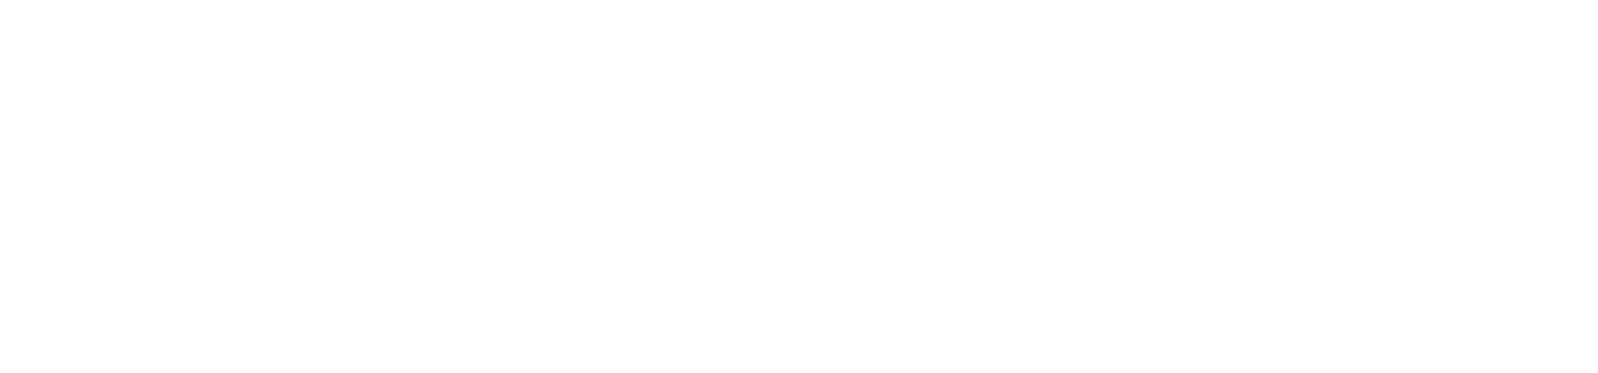 NV Bekaert logo grand pour les fonds sombres (PNG transparent)